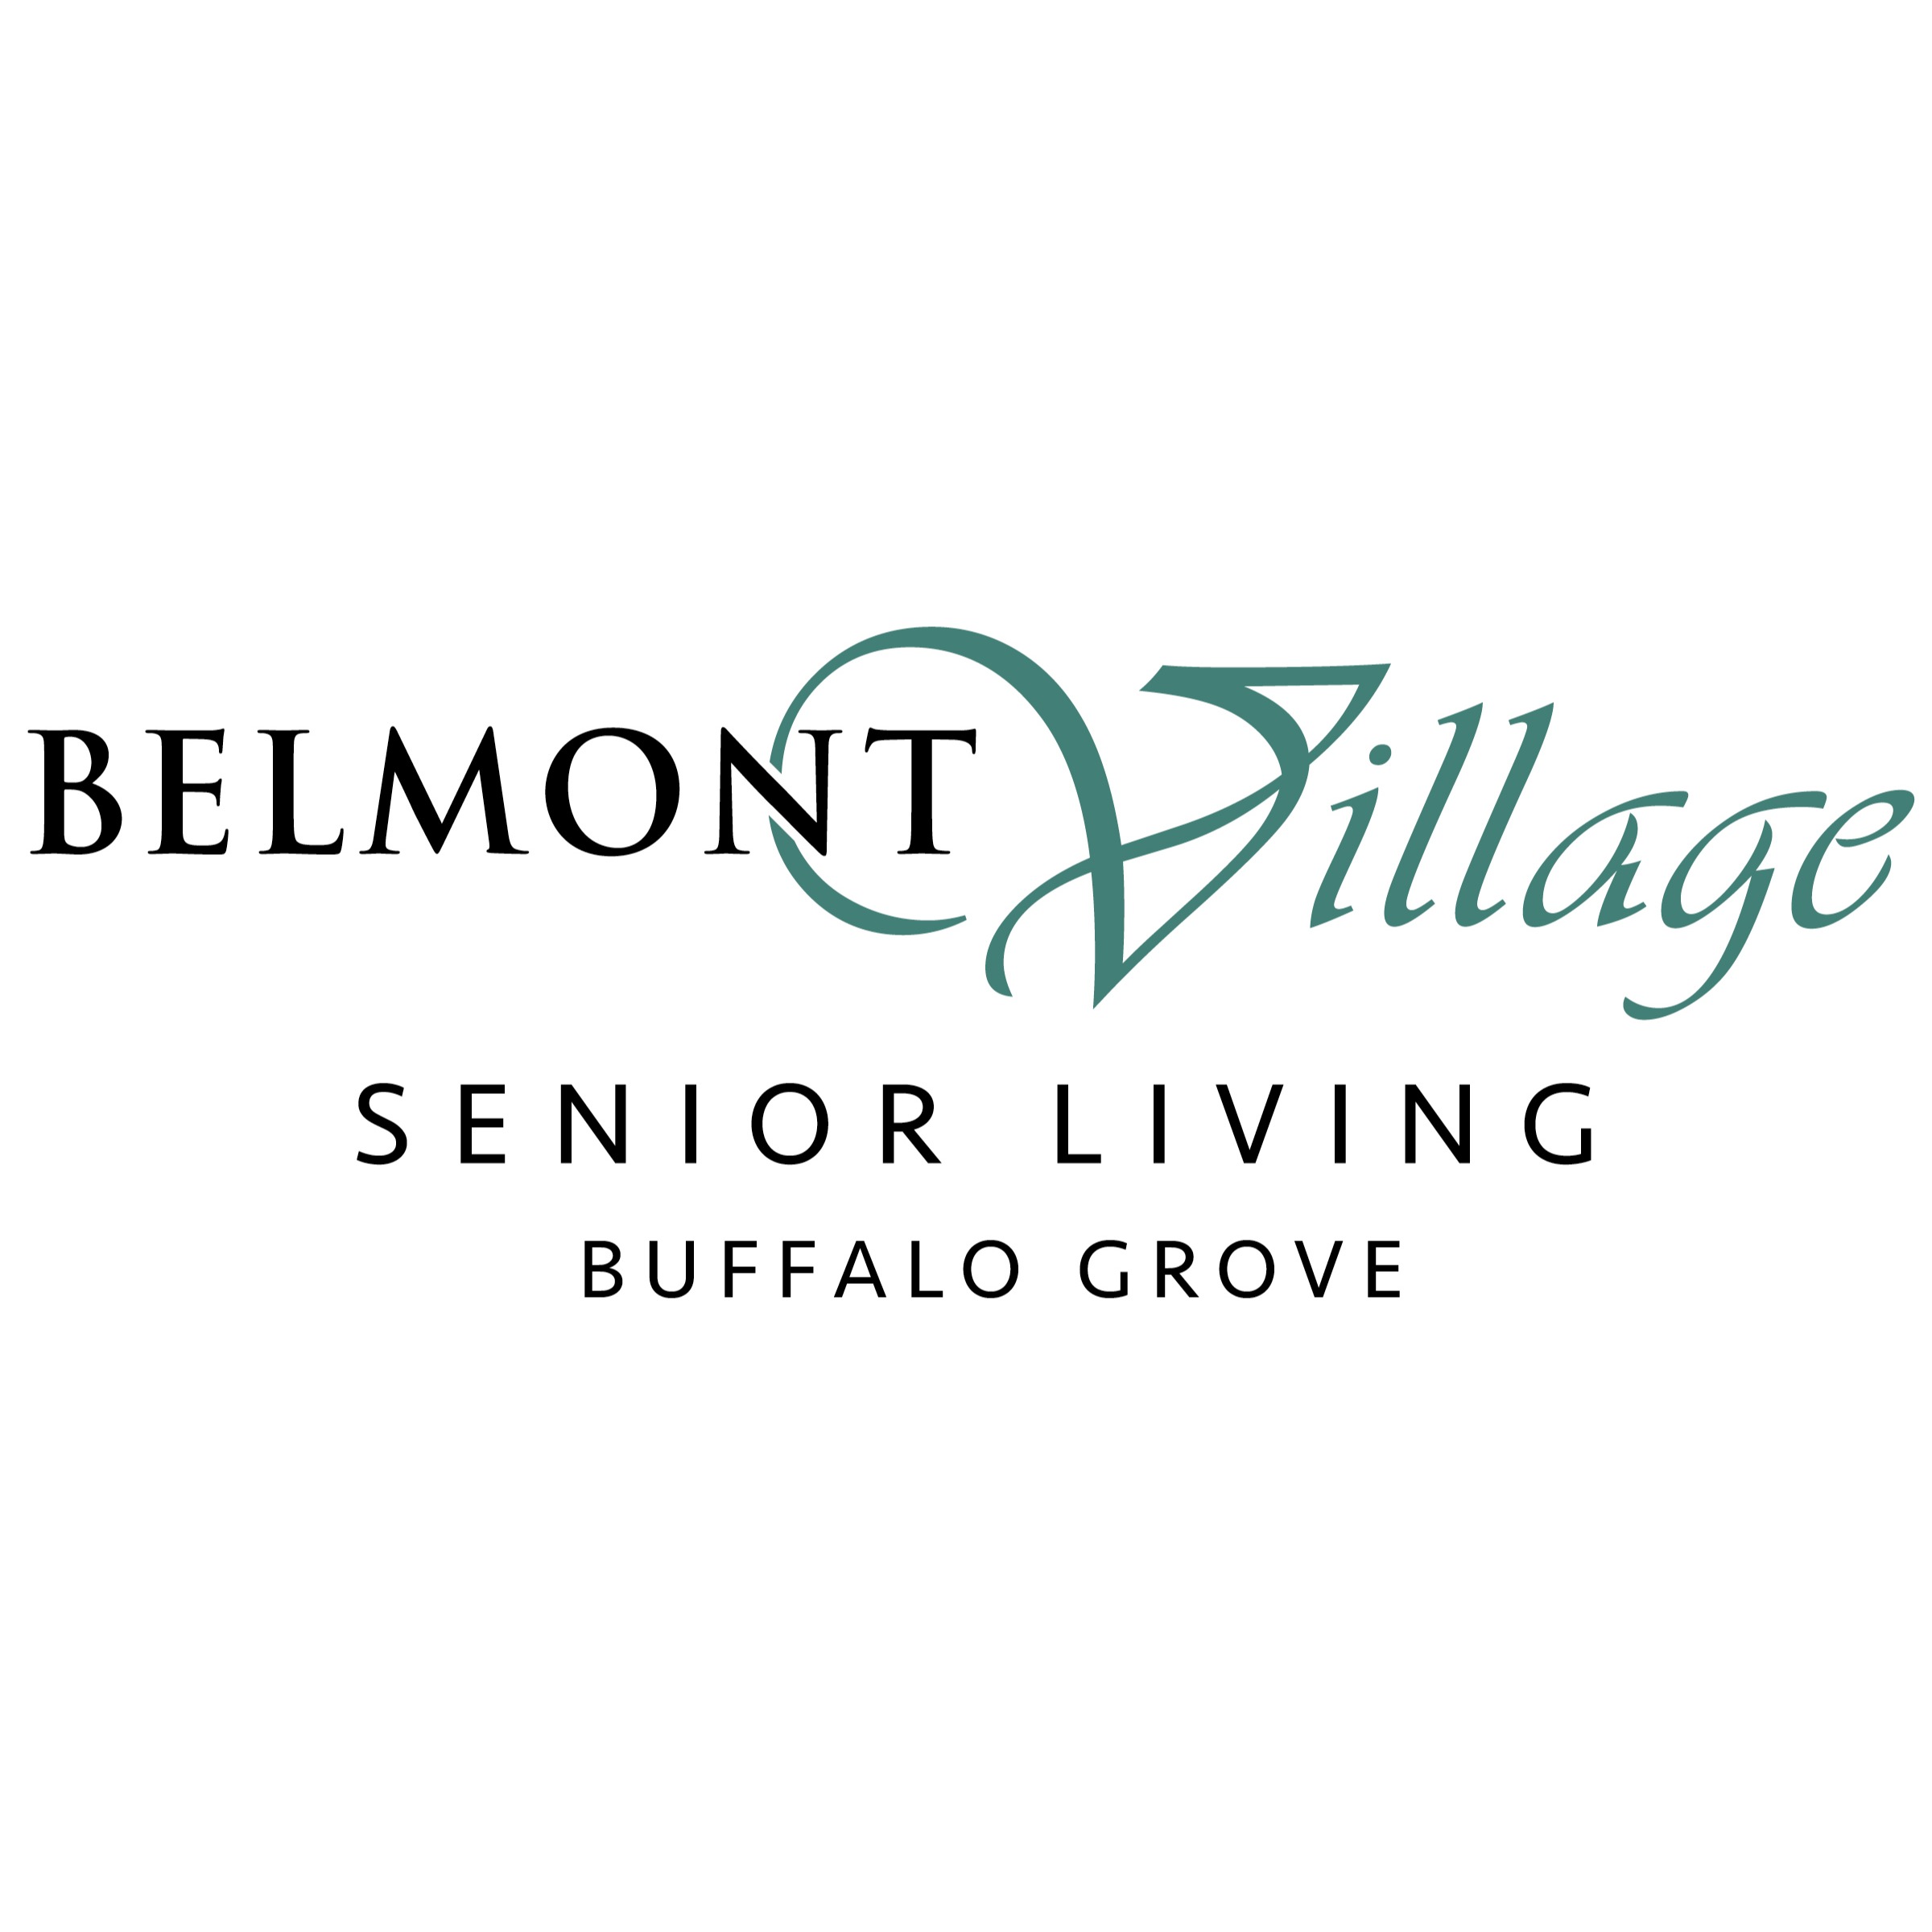 Belmont Village Senior Living Buffalo Grove